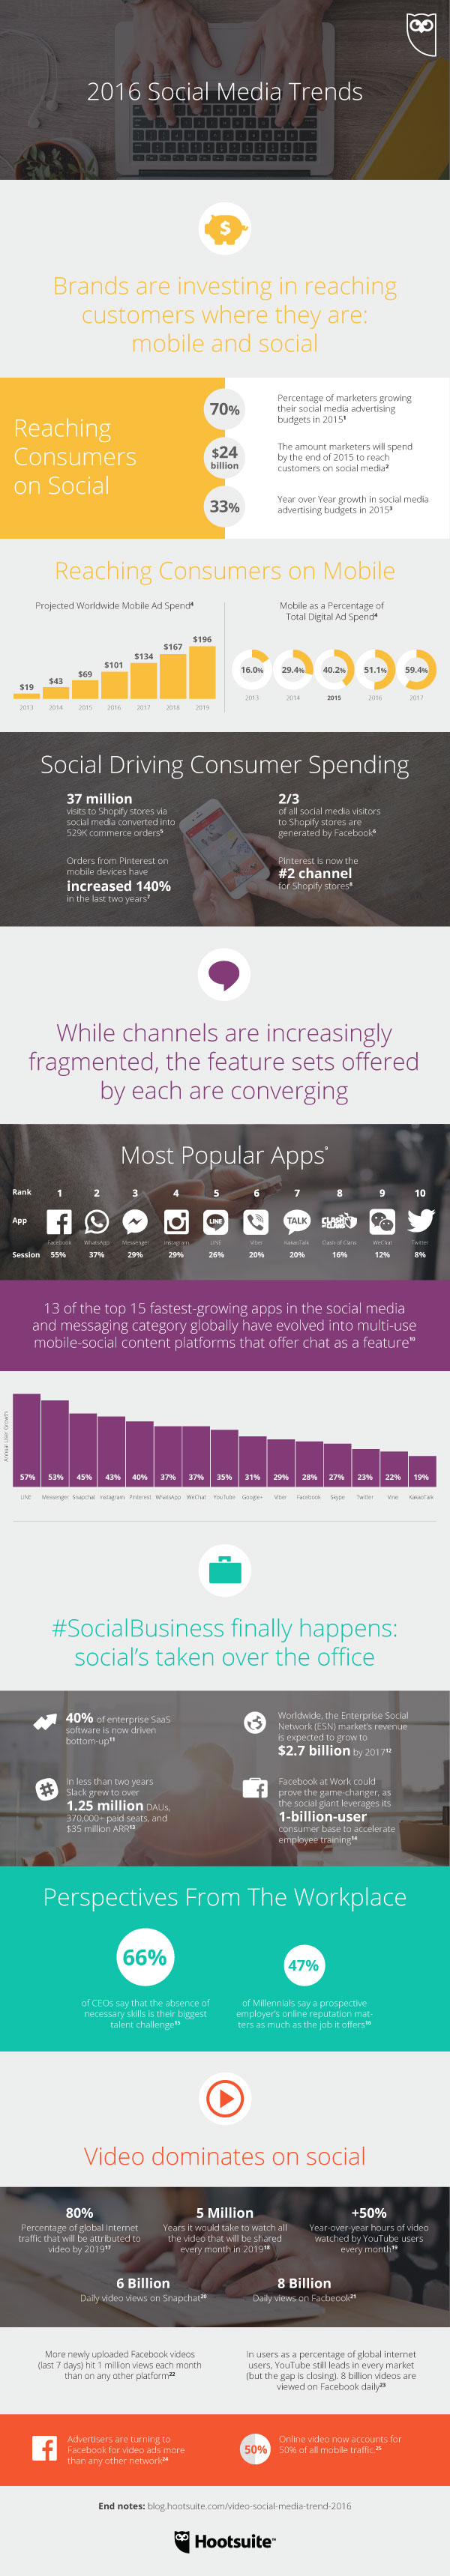 2016-social-media-trends-infographic